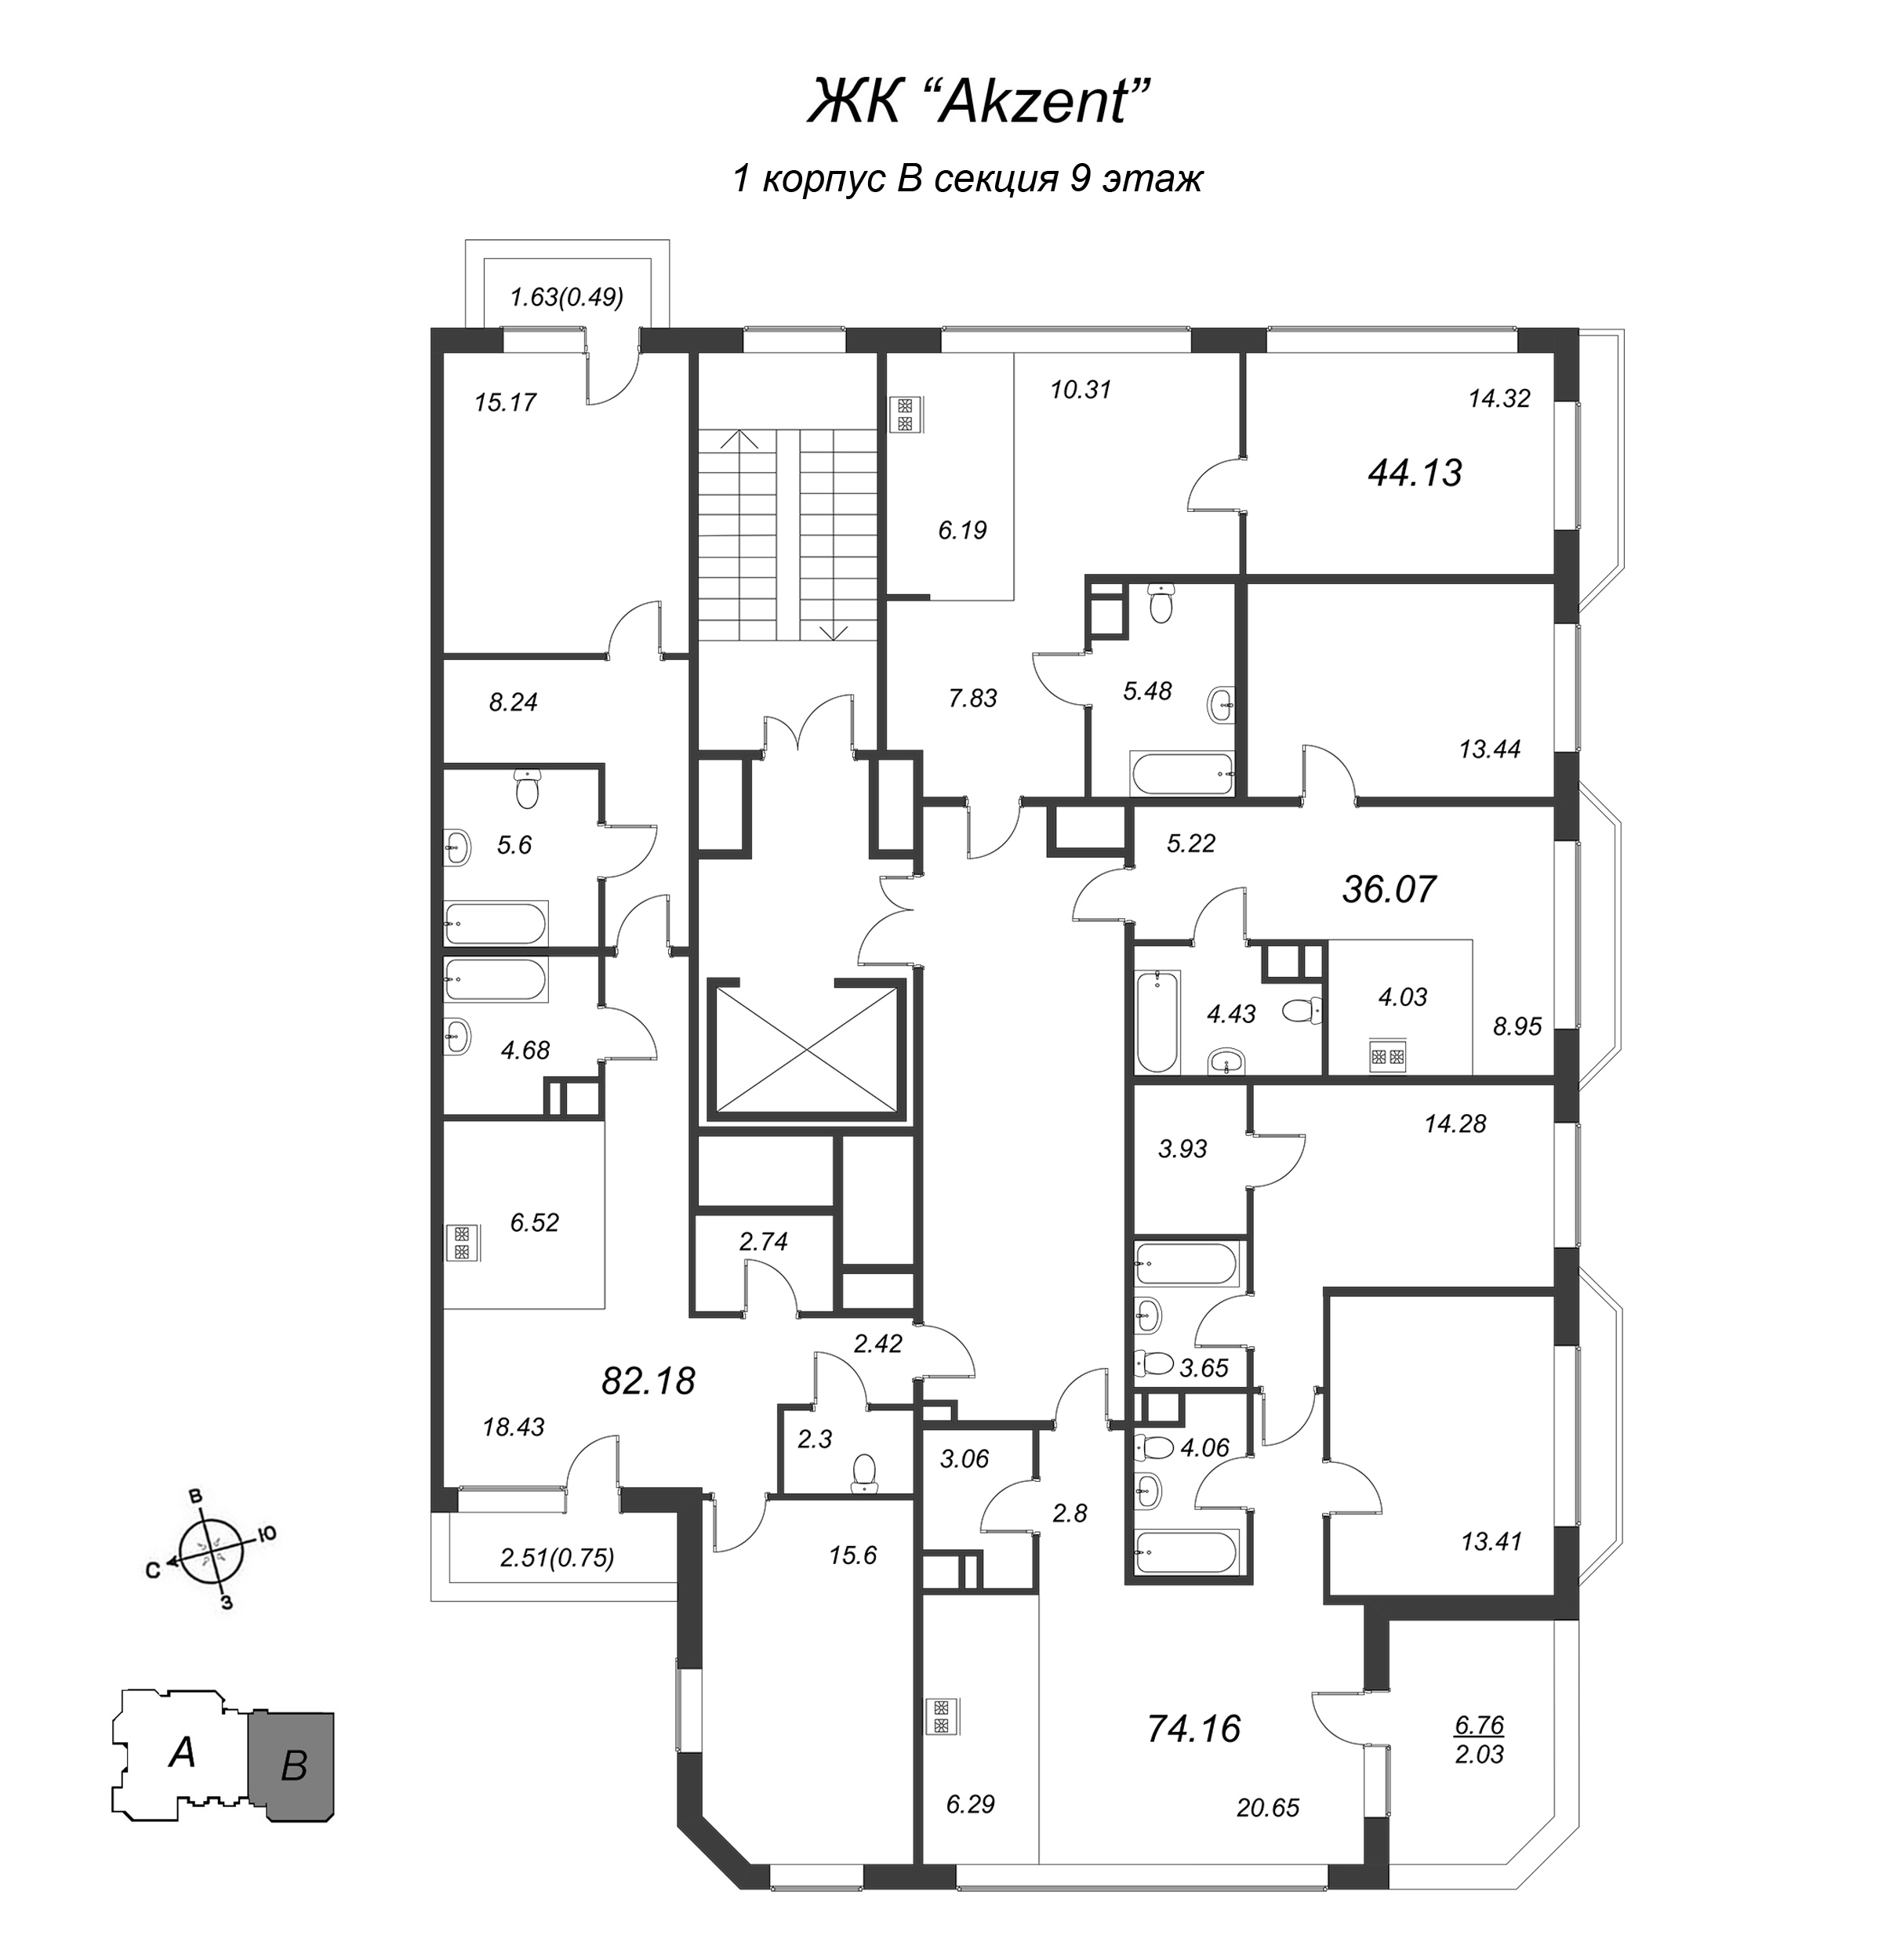 2-комнатная (Евро) квартира, 44.13 м² - планировка этажа